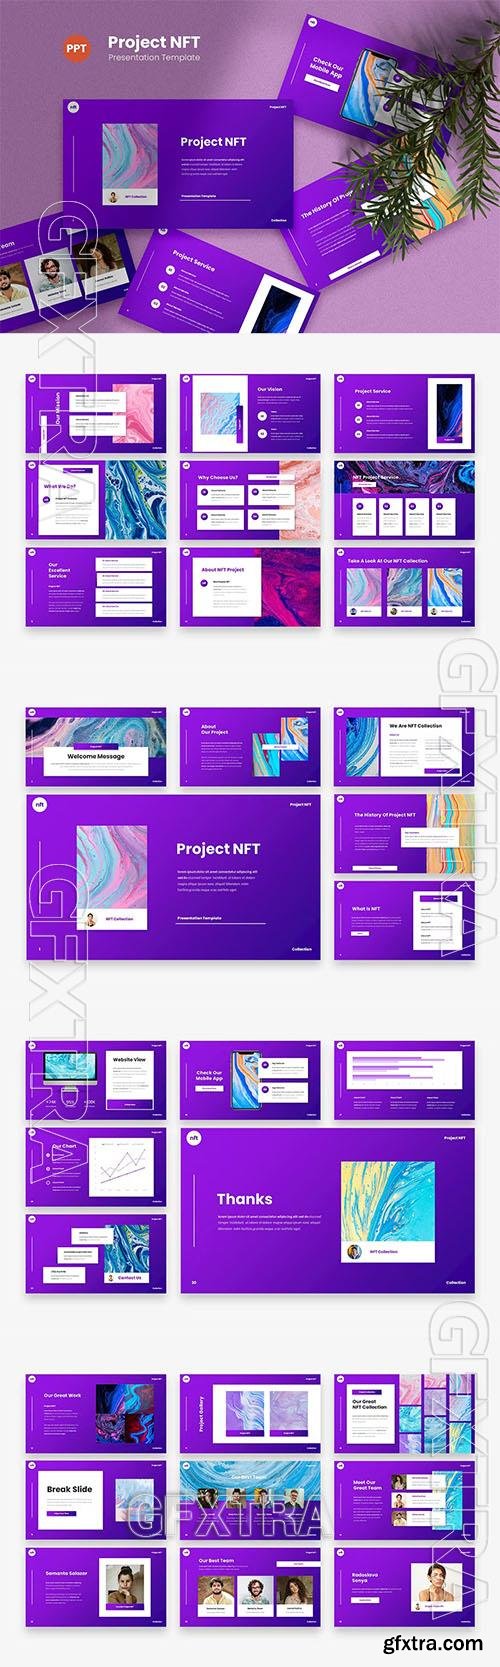 Project NFT - Creative PowerPoint Template GTGUDQ3